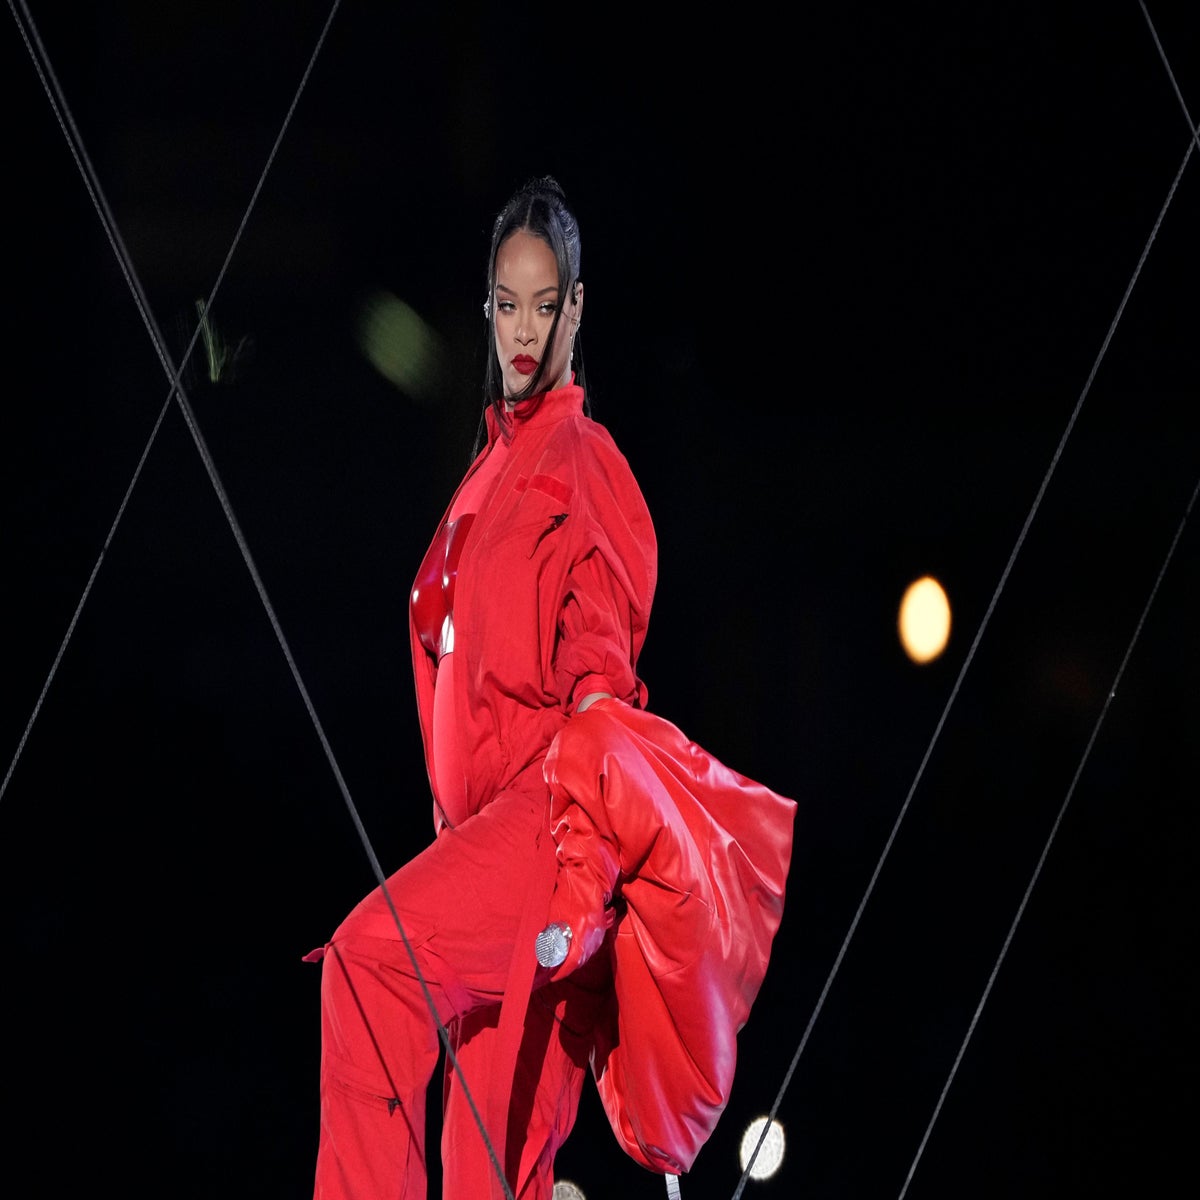 Rihanna's Super Bowl outfit designer unveils latest catwalk collection